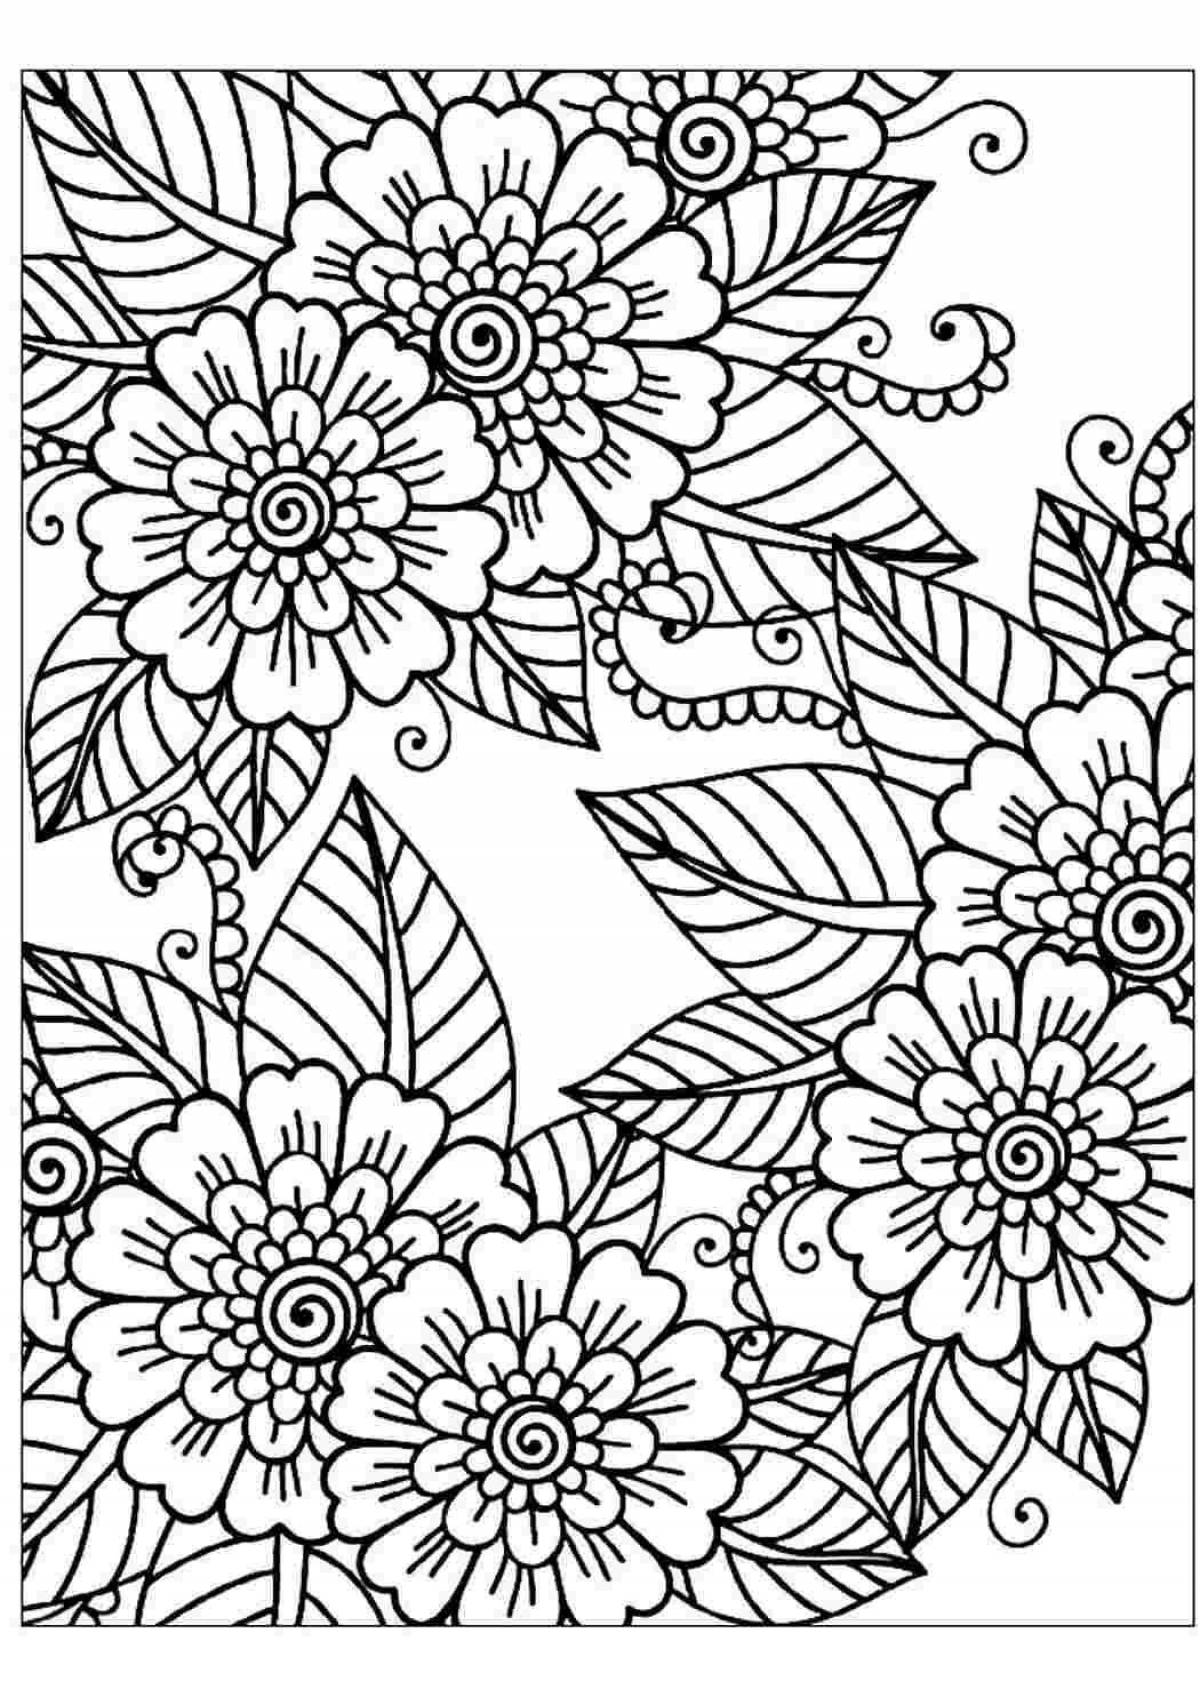 Fun complex flower coloring book